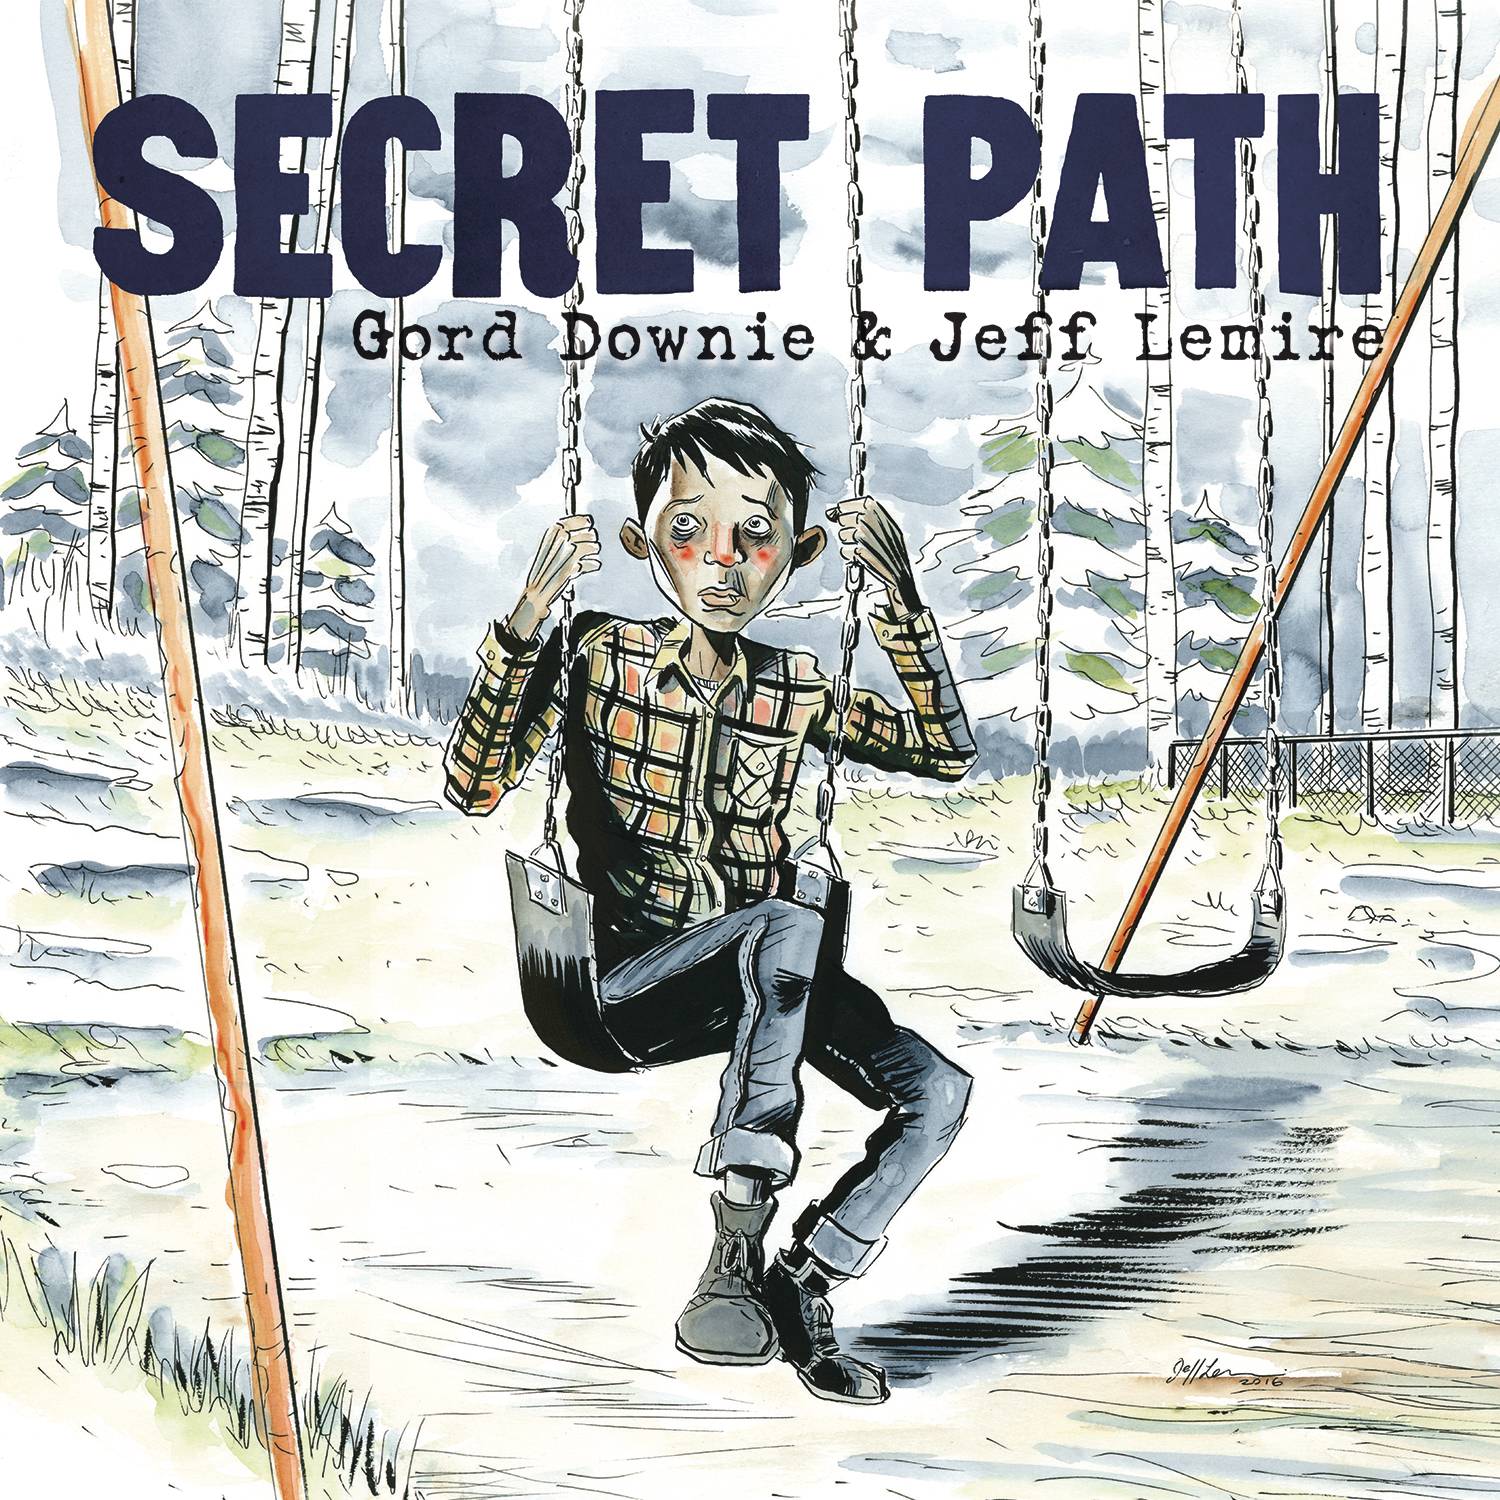 Secret paths